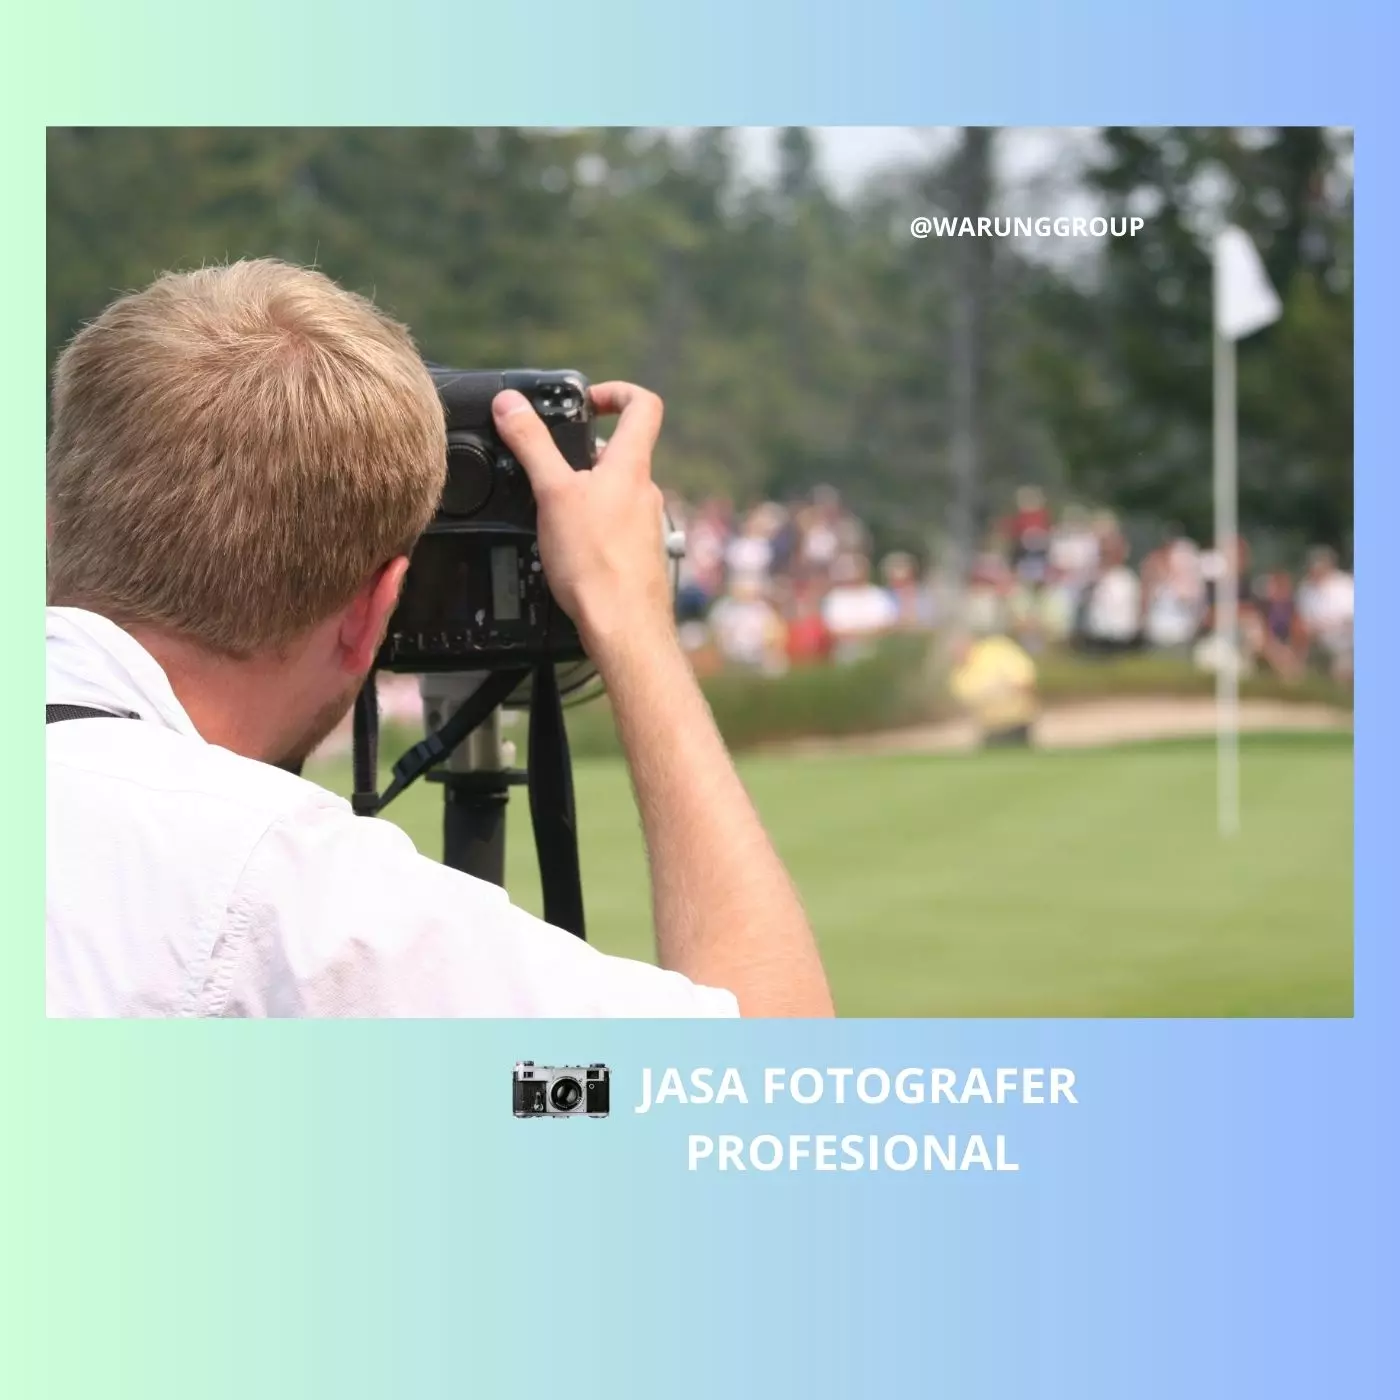 Jasa Fotografer Profesional